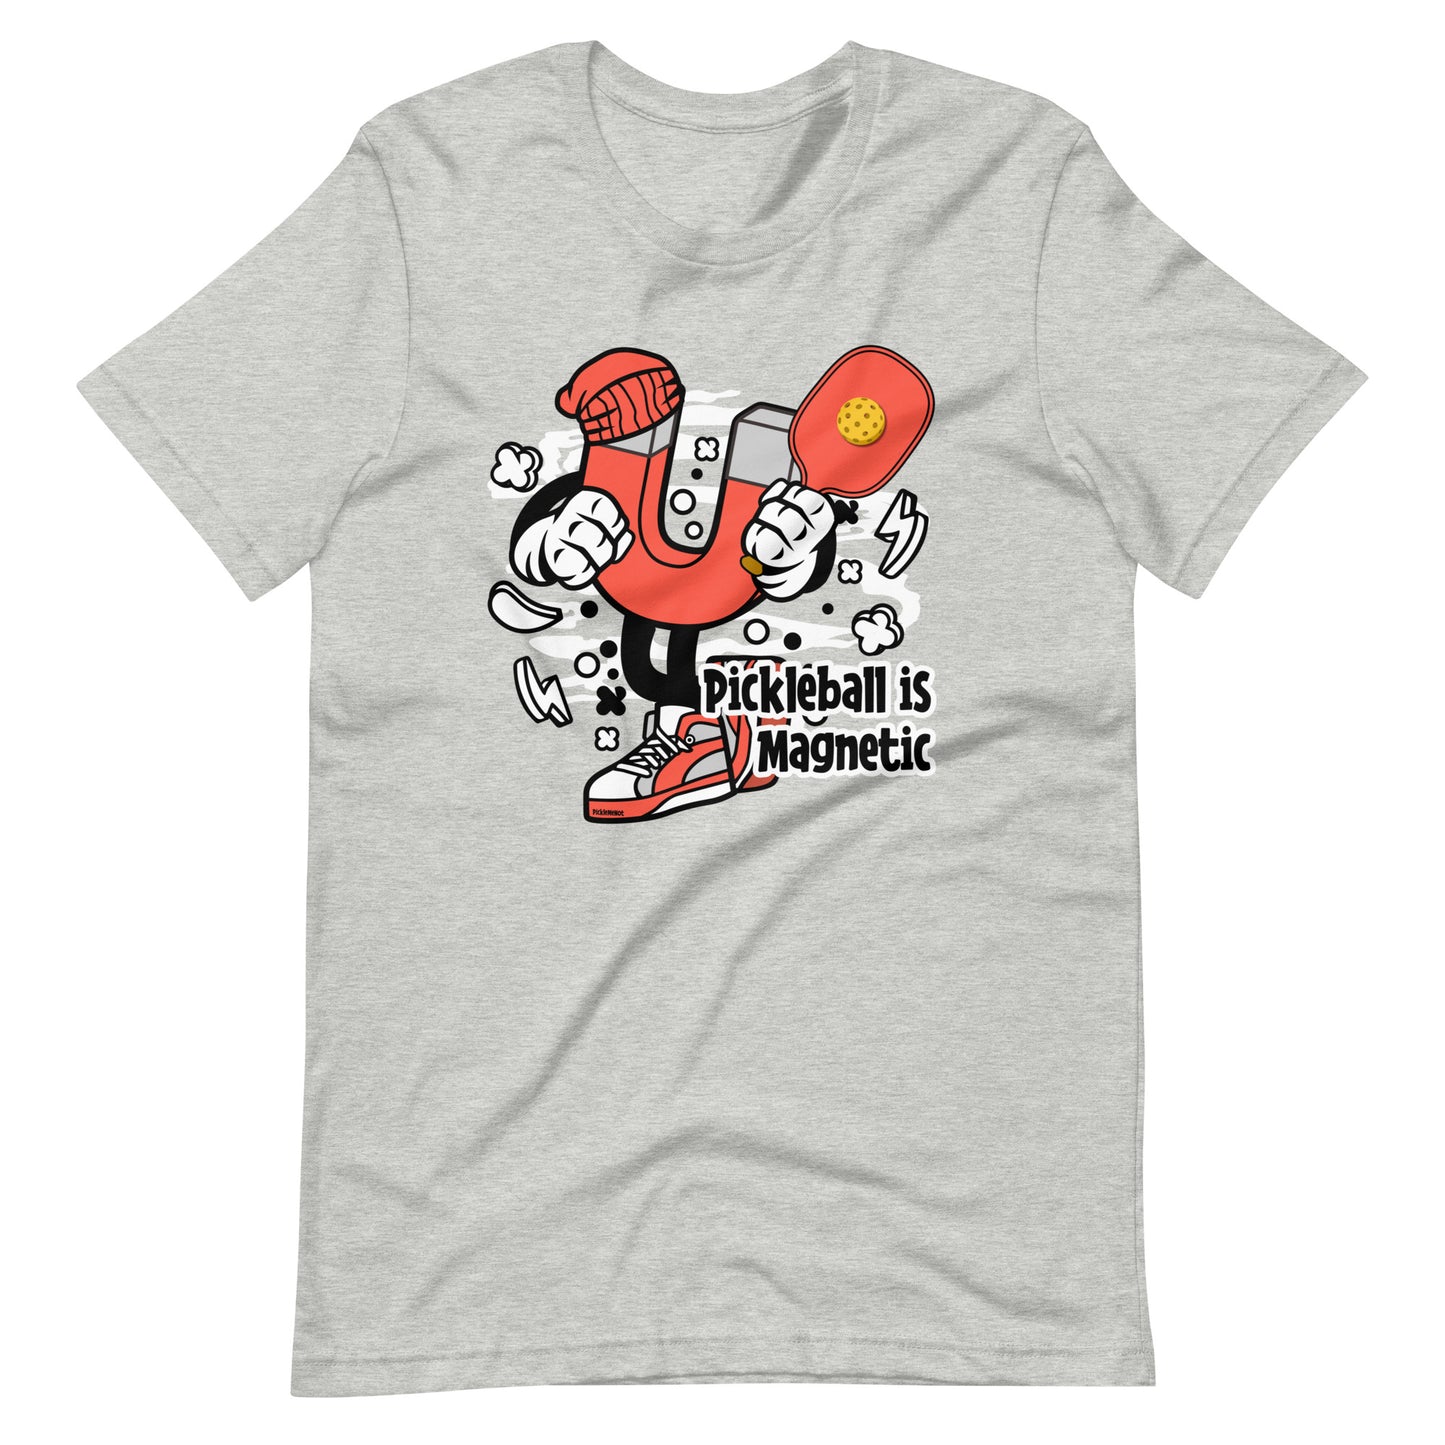 Retro-Vintage Fun Pickleball , "Pickleball is Magnetic" Unisex Women's Athletic Heather T-Shirt